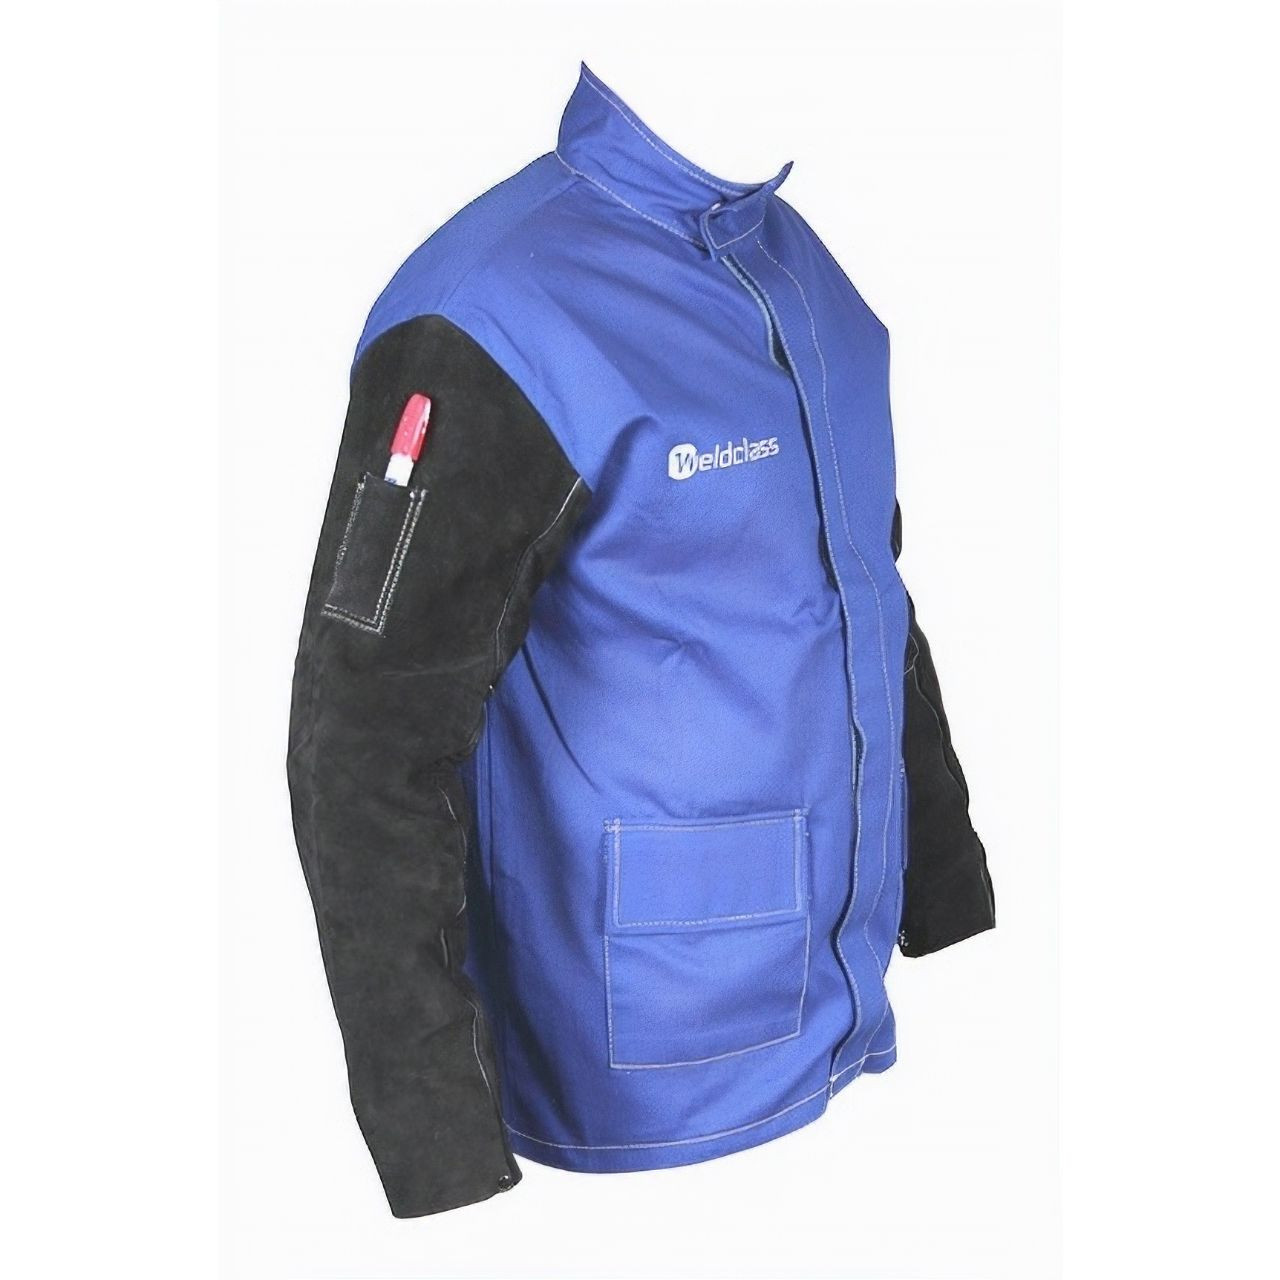 Weldclass Promax Blue FR Jacket w/Leather Sleeves M